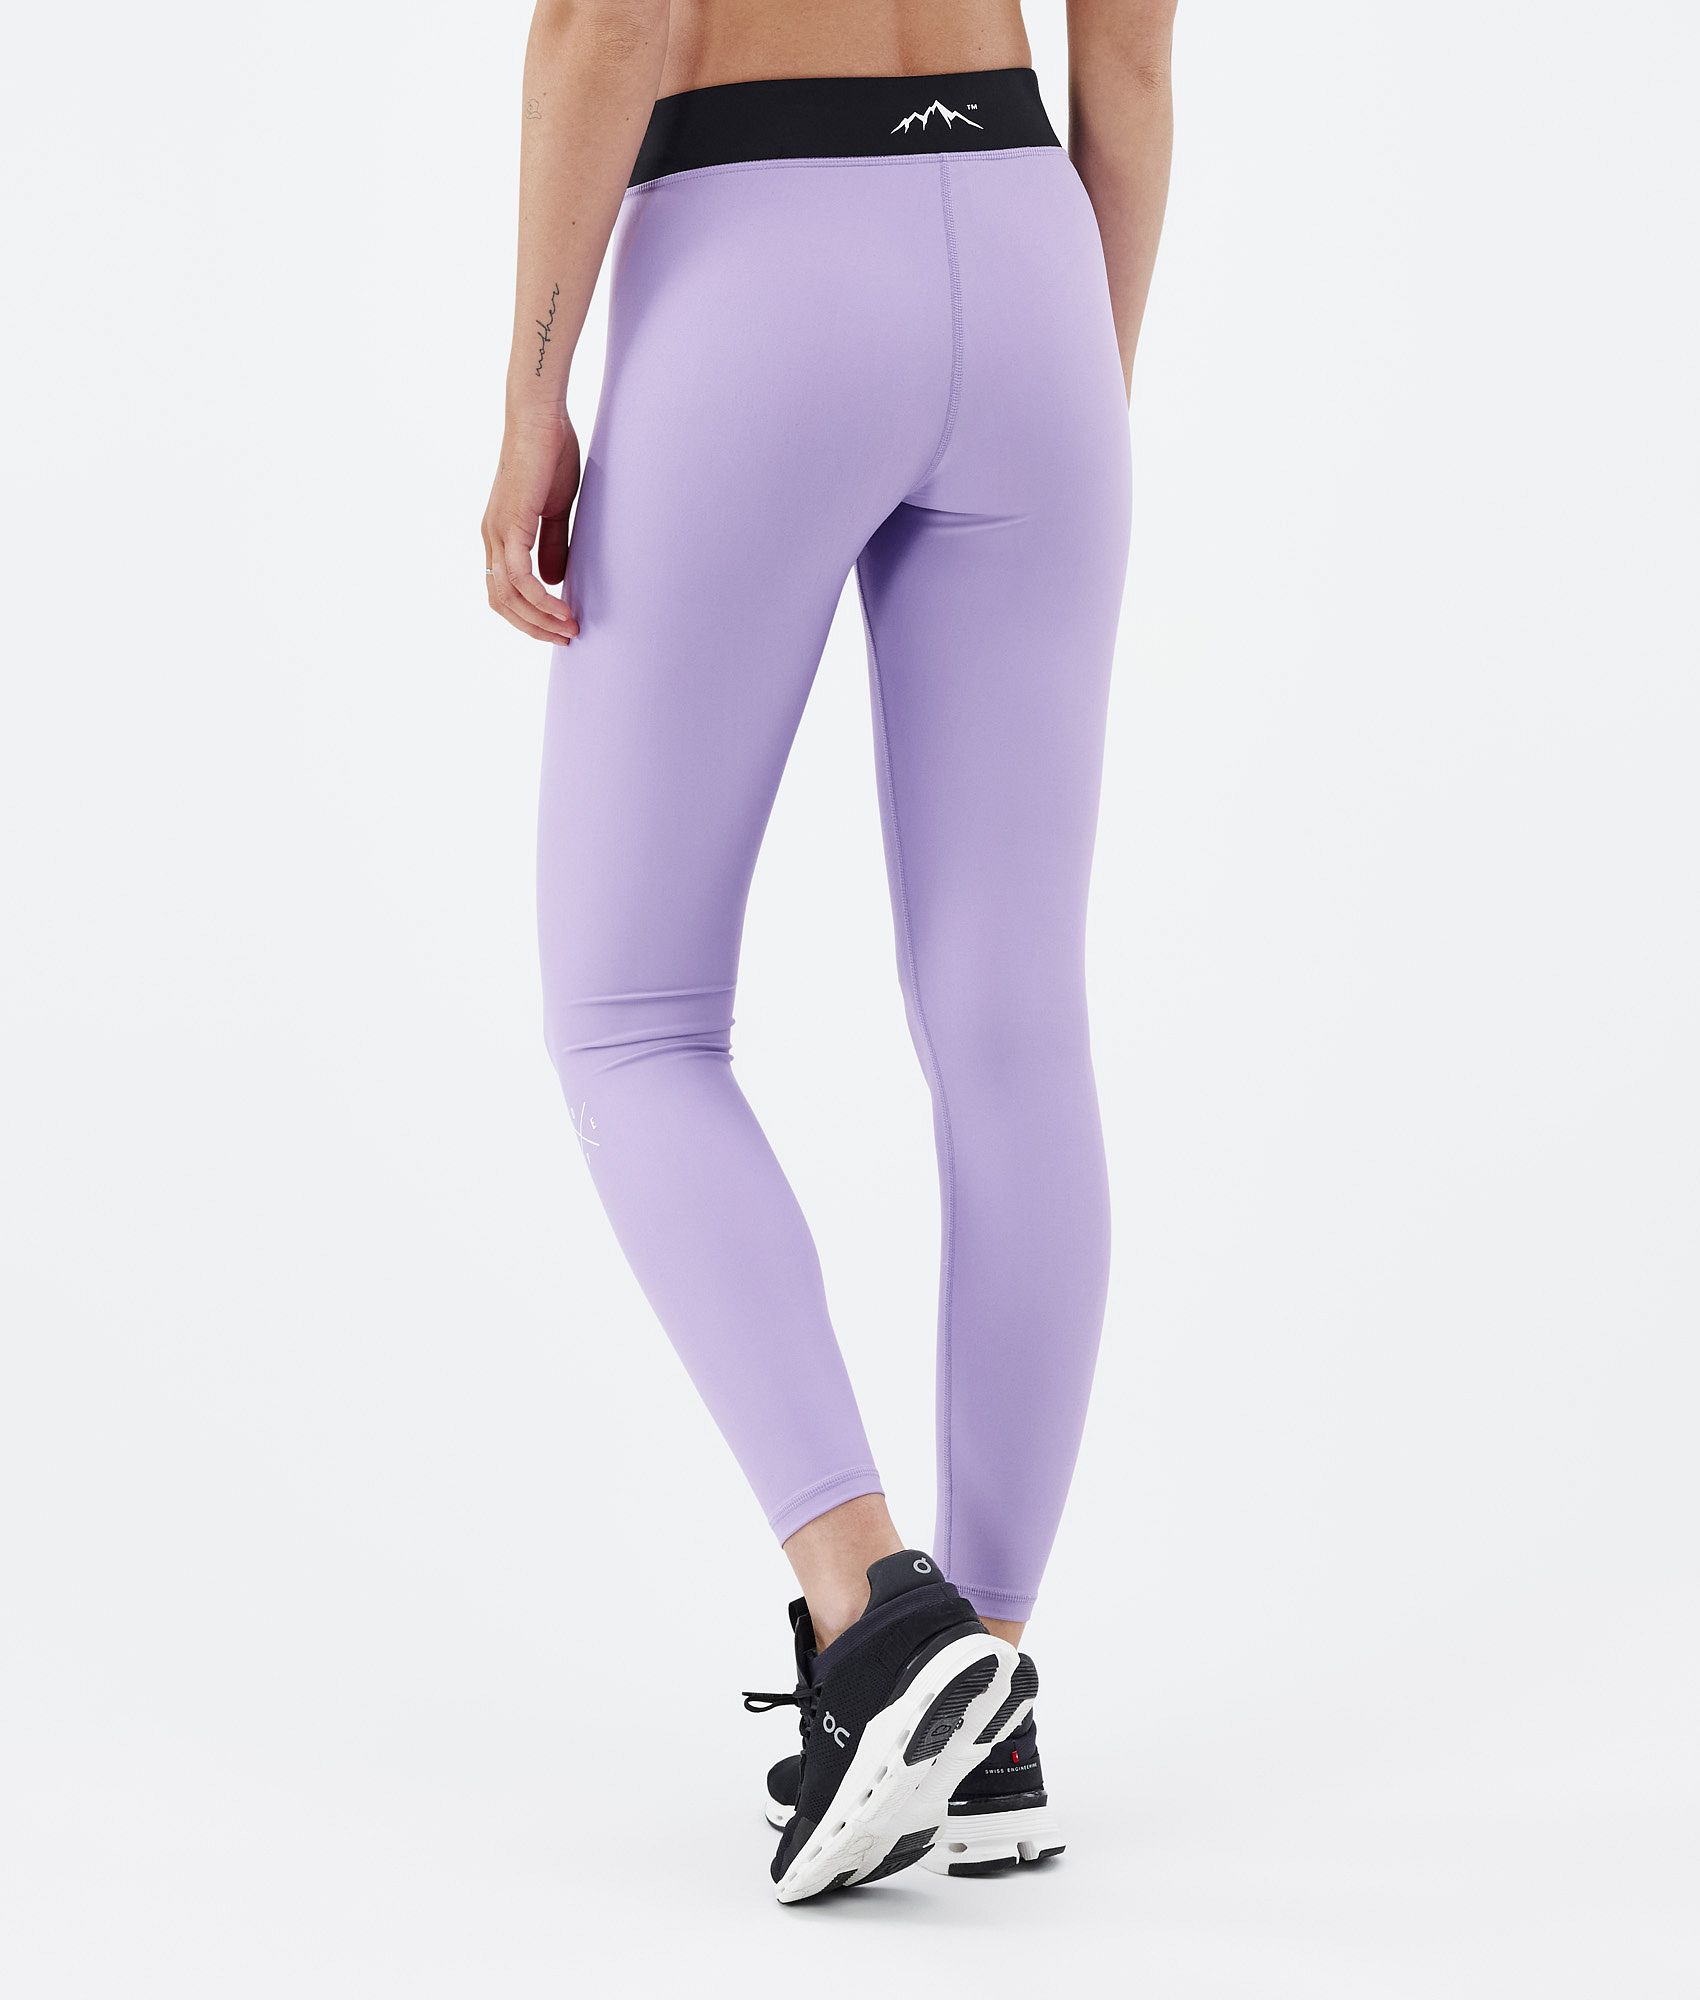 Women Yoga Pants Pocket Butt Lift Anti-Cellulite High Waist Push Up Leggings  | eBay